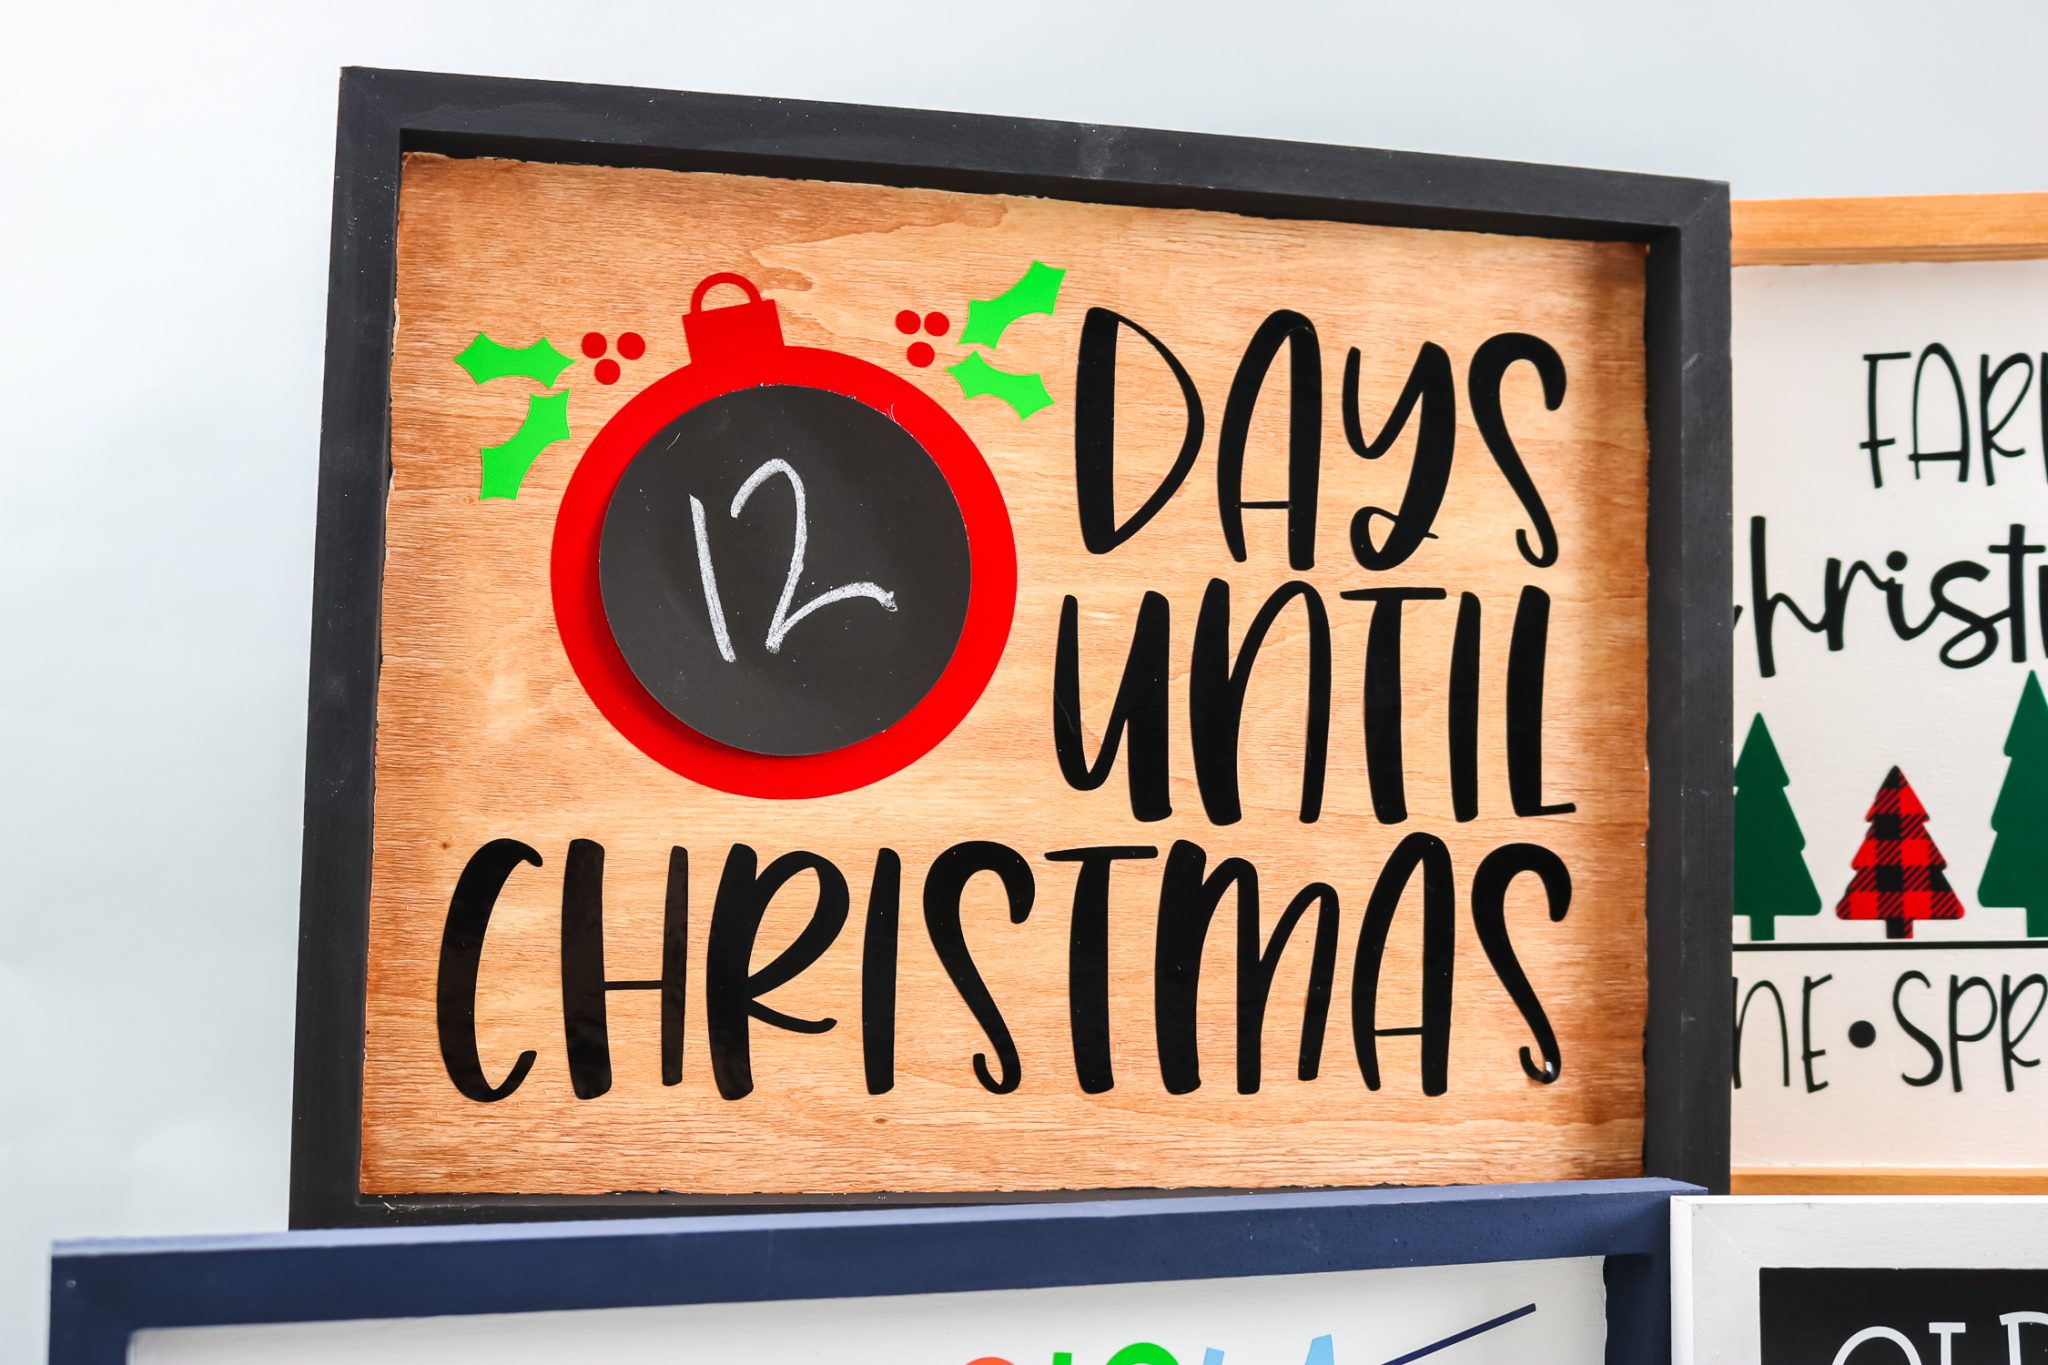 Days until Christmas layered vinyl Cricut sign.